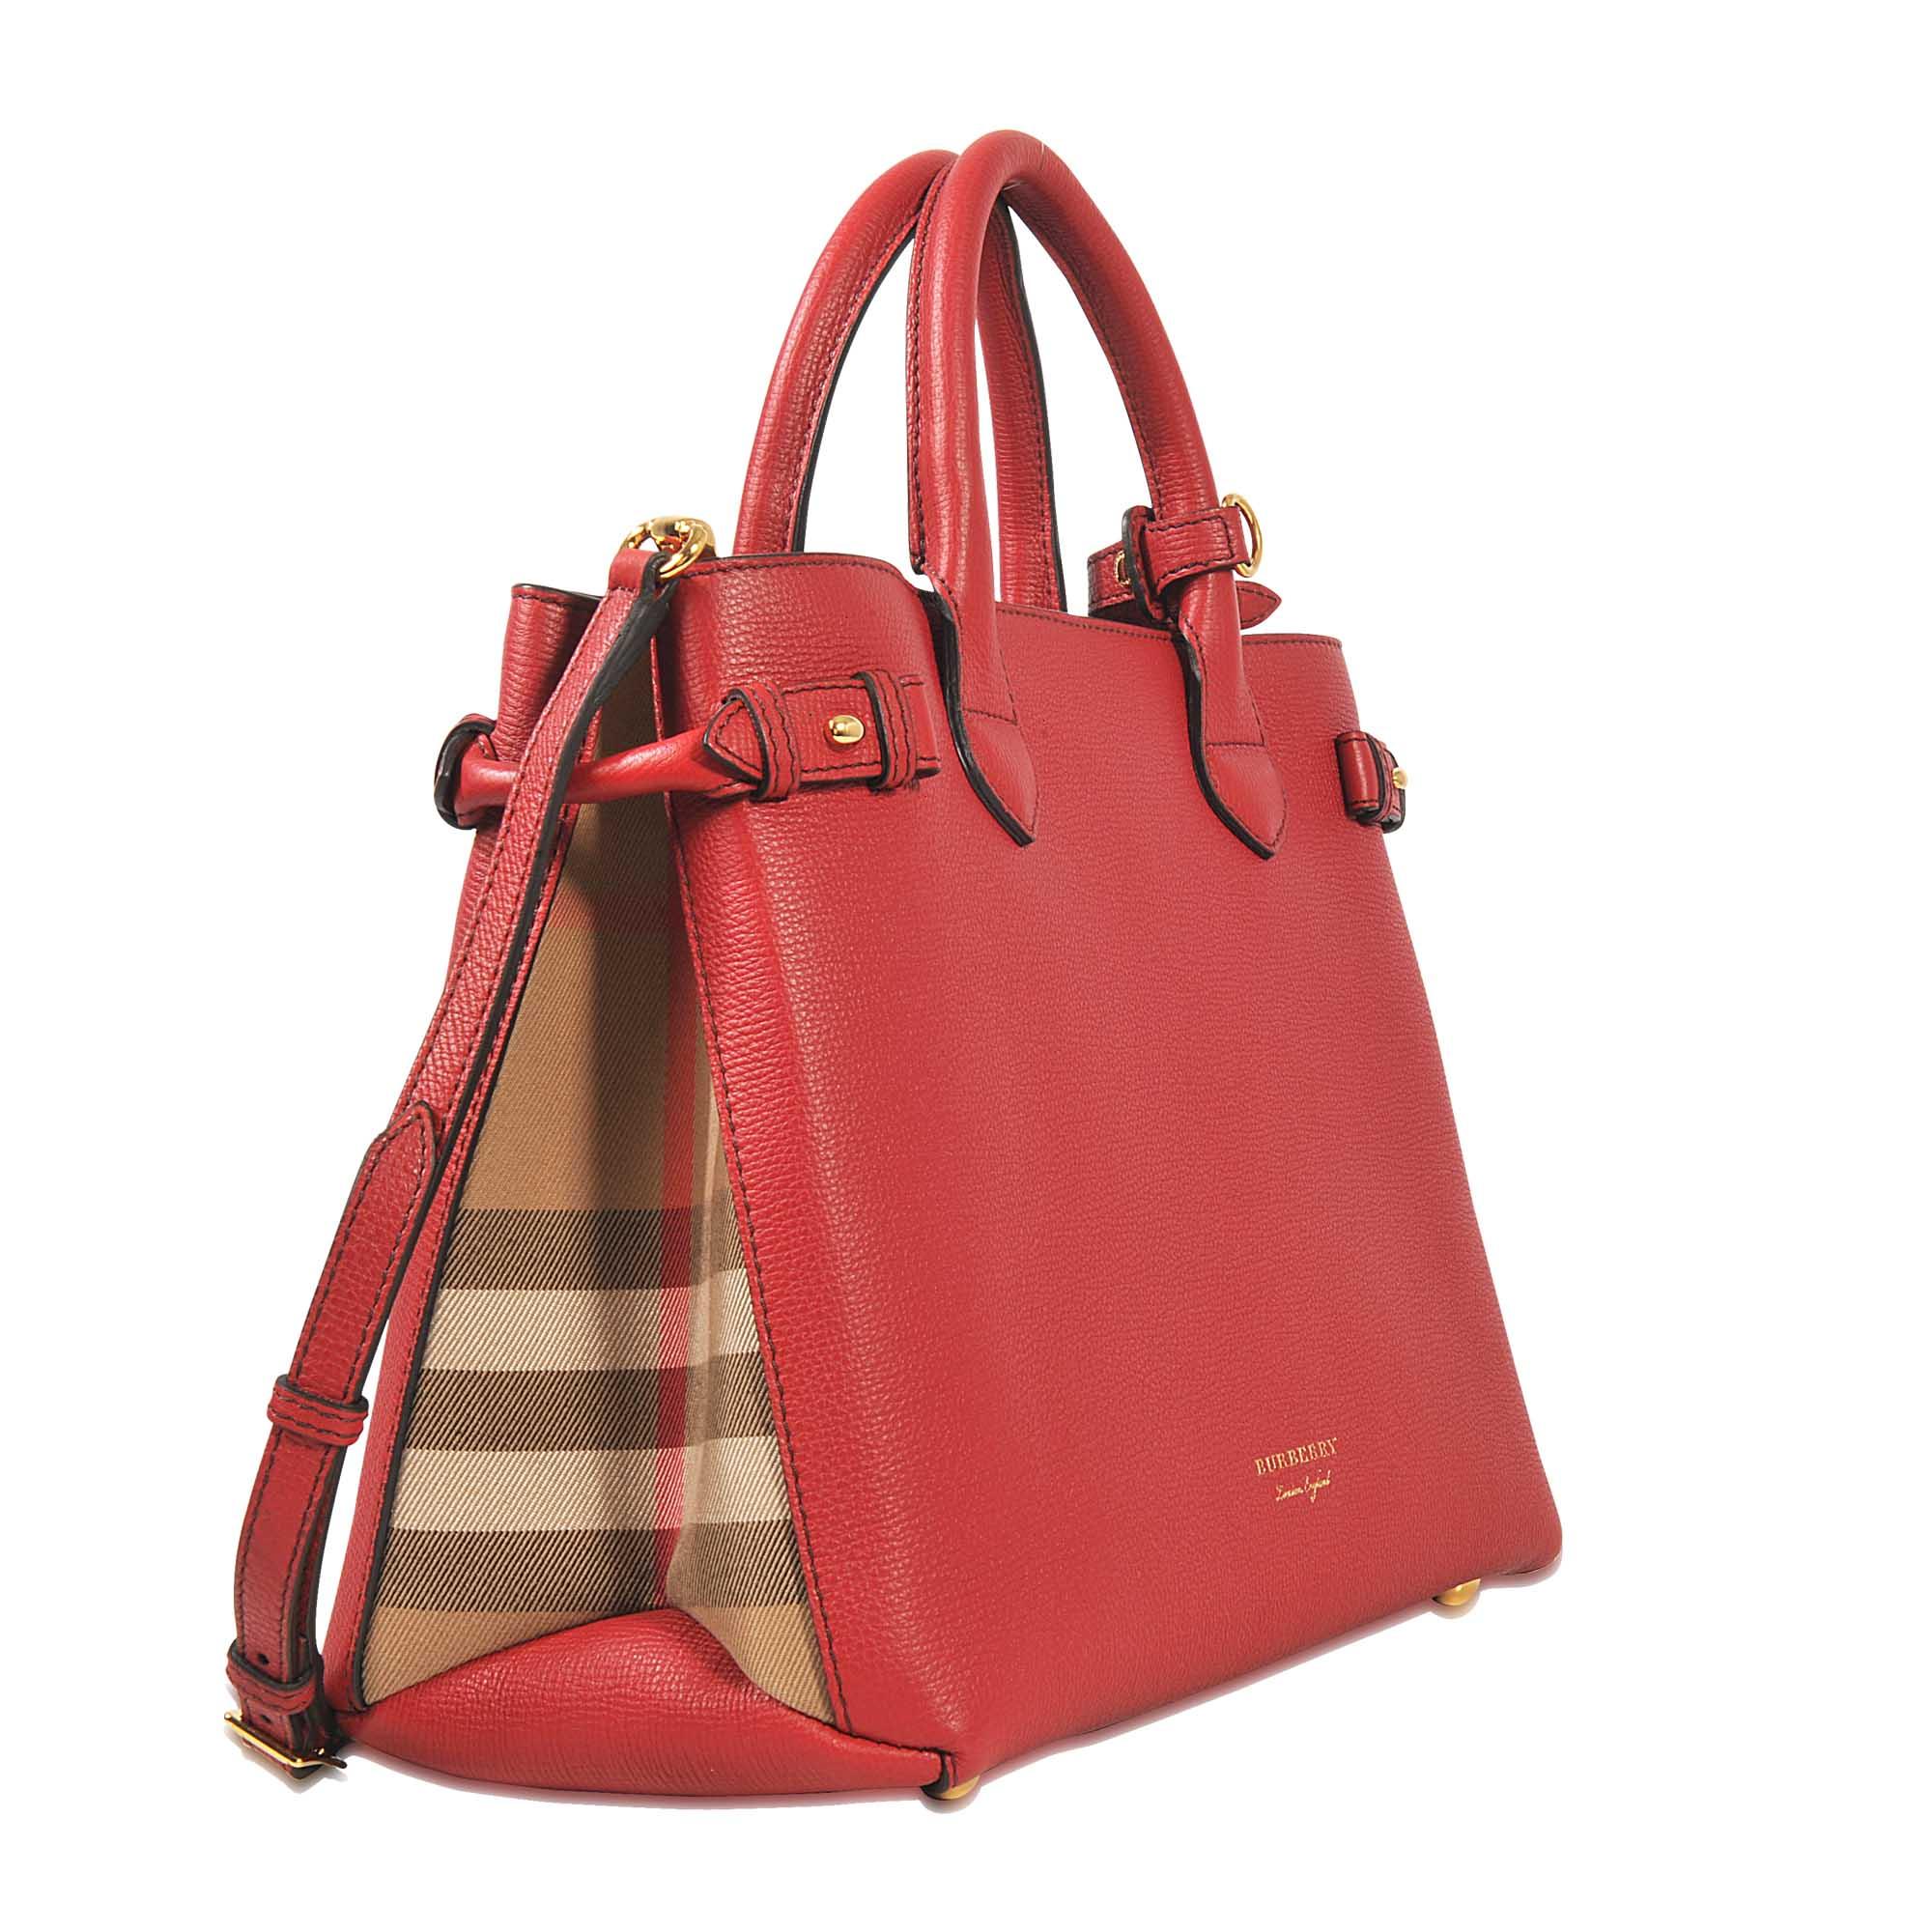 Lyst - Burberry Medium Banner Bag in Red